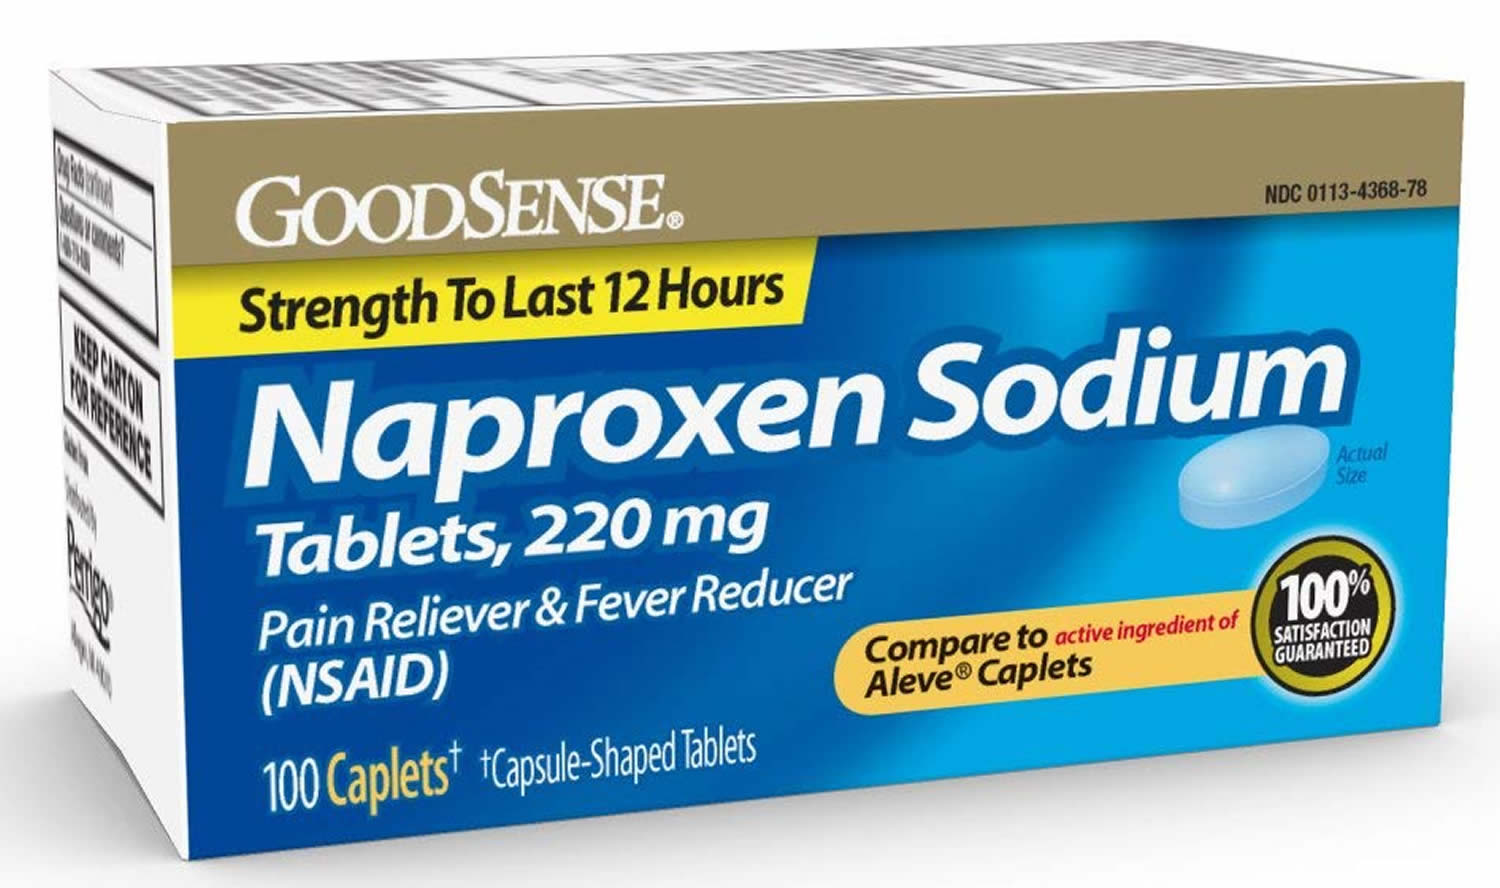 Naproxen Sodium - Uses, Dosage, Naproxen Side Effects